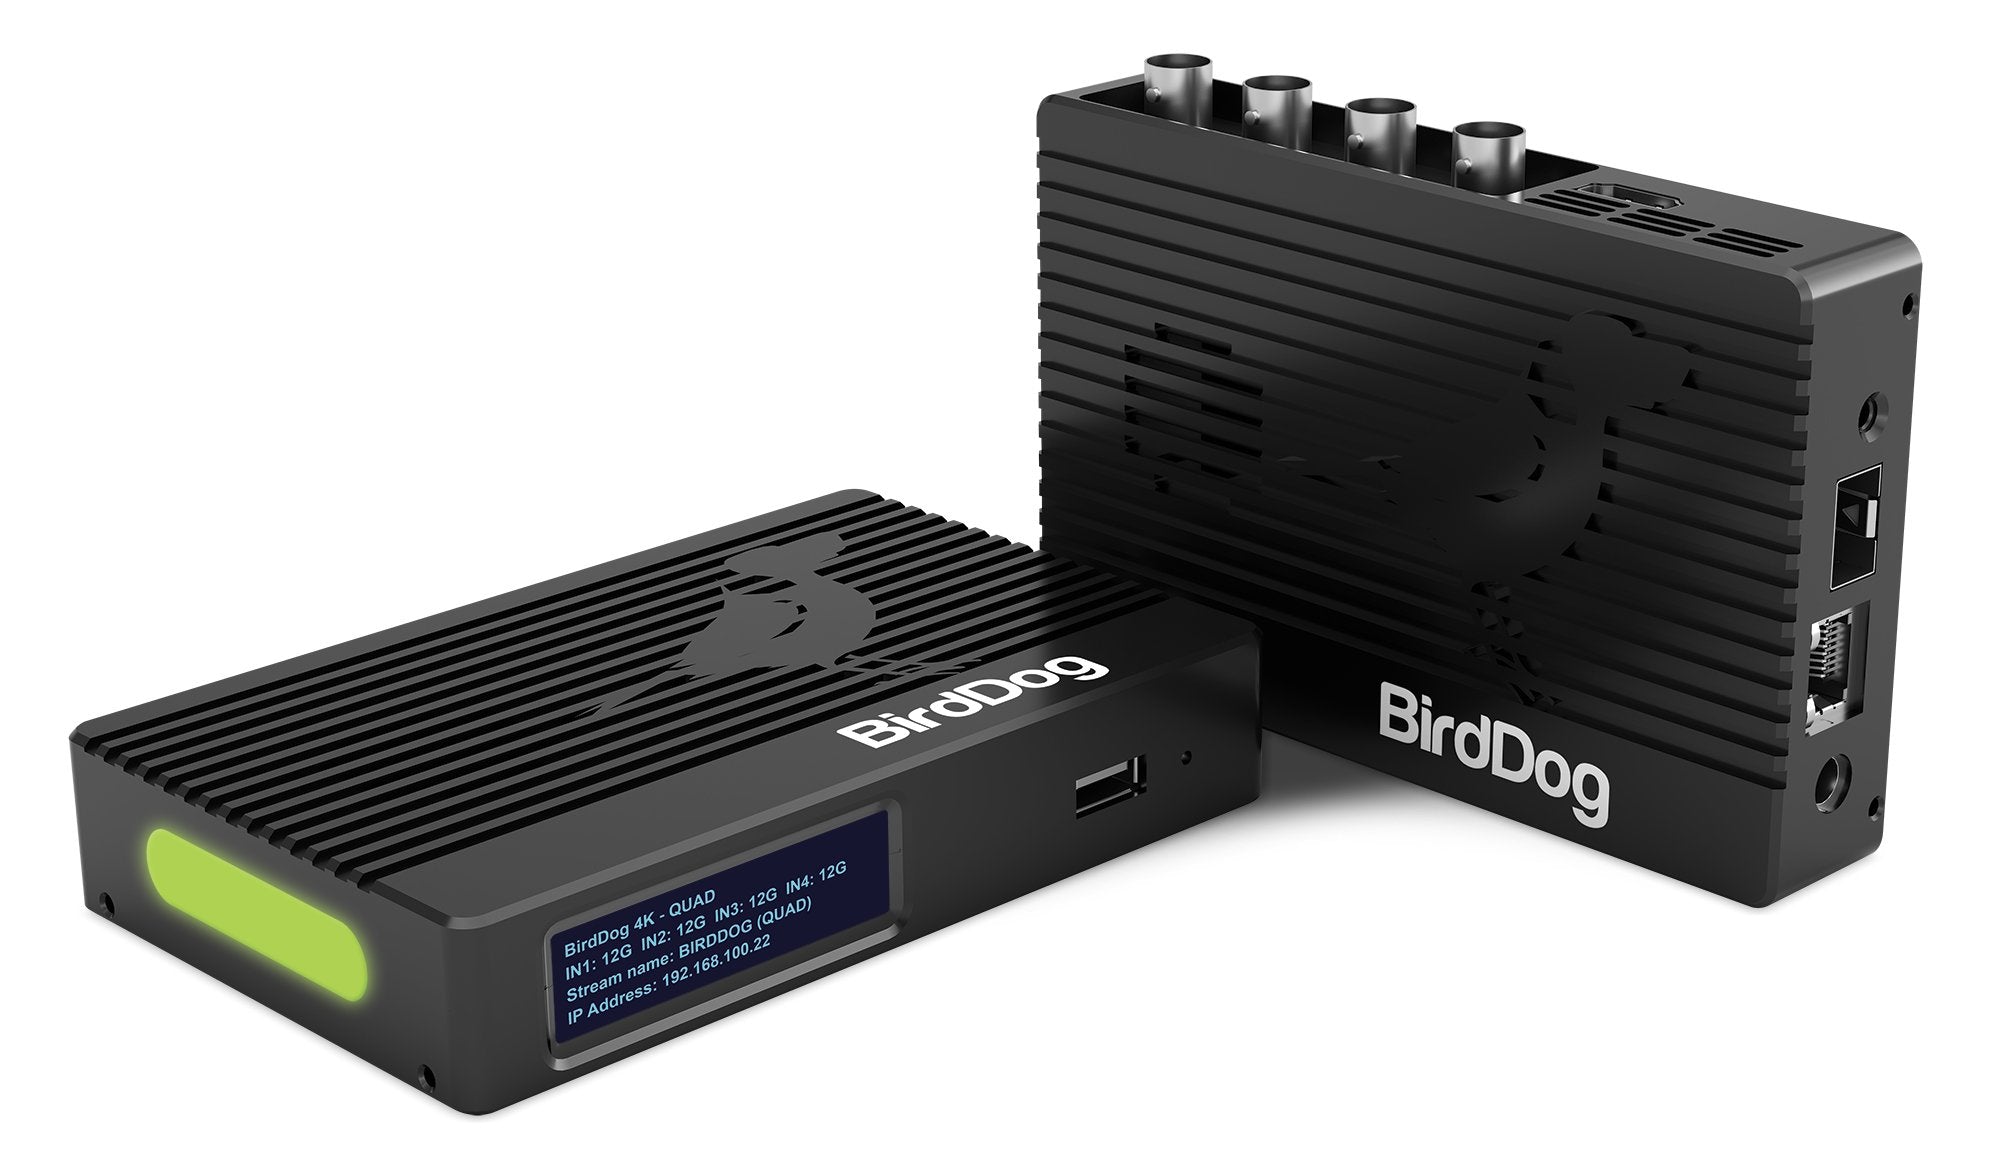 BirdDog 4K Quad NDI Encoder/Decoder